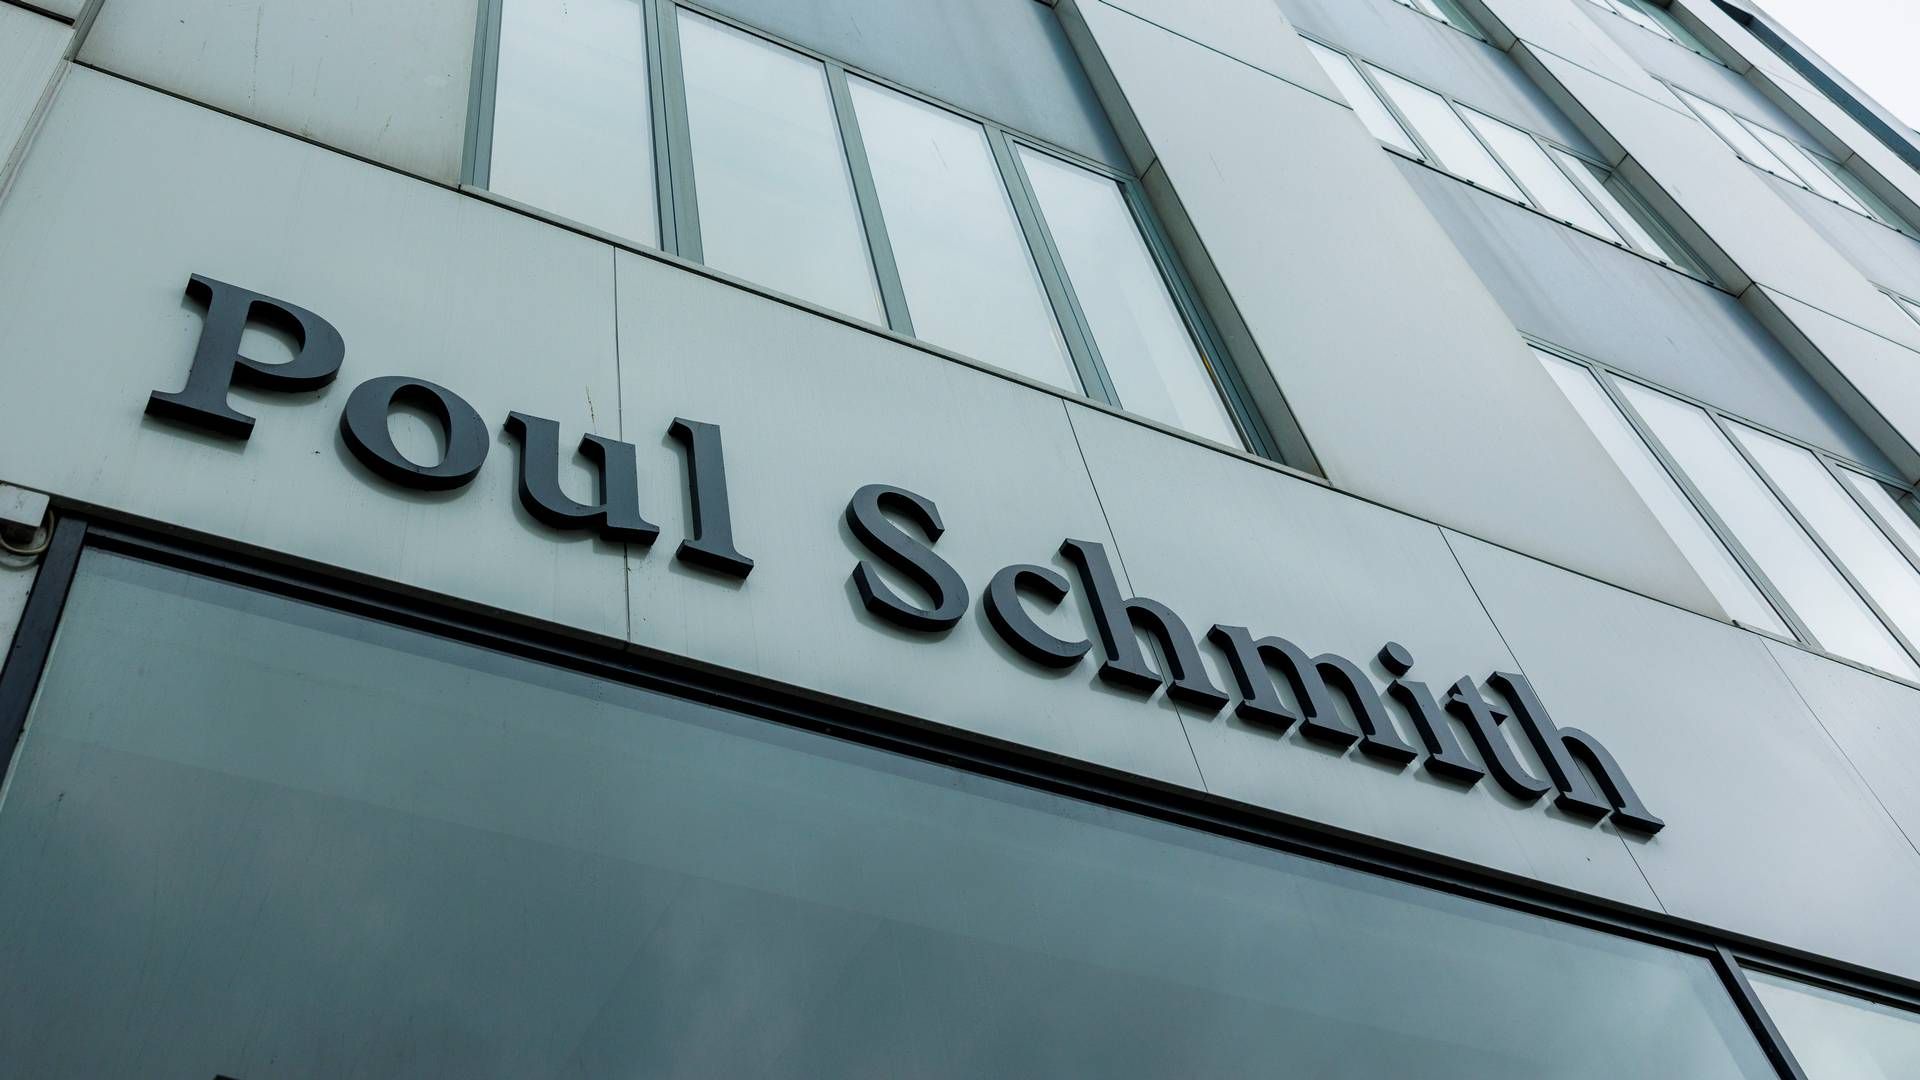 Advokatfirmaet Poul Schmith er i øjeblikket statens advokat. | Foto: Pr